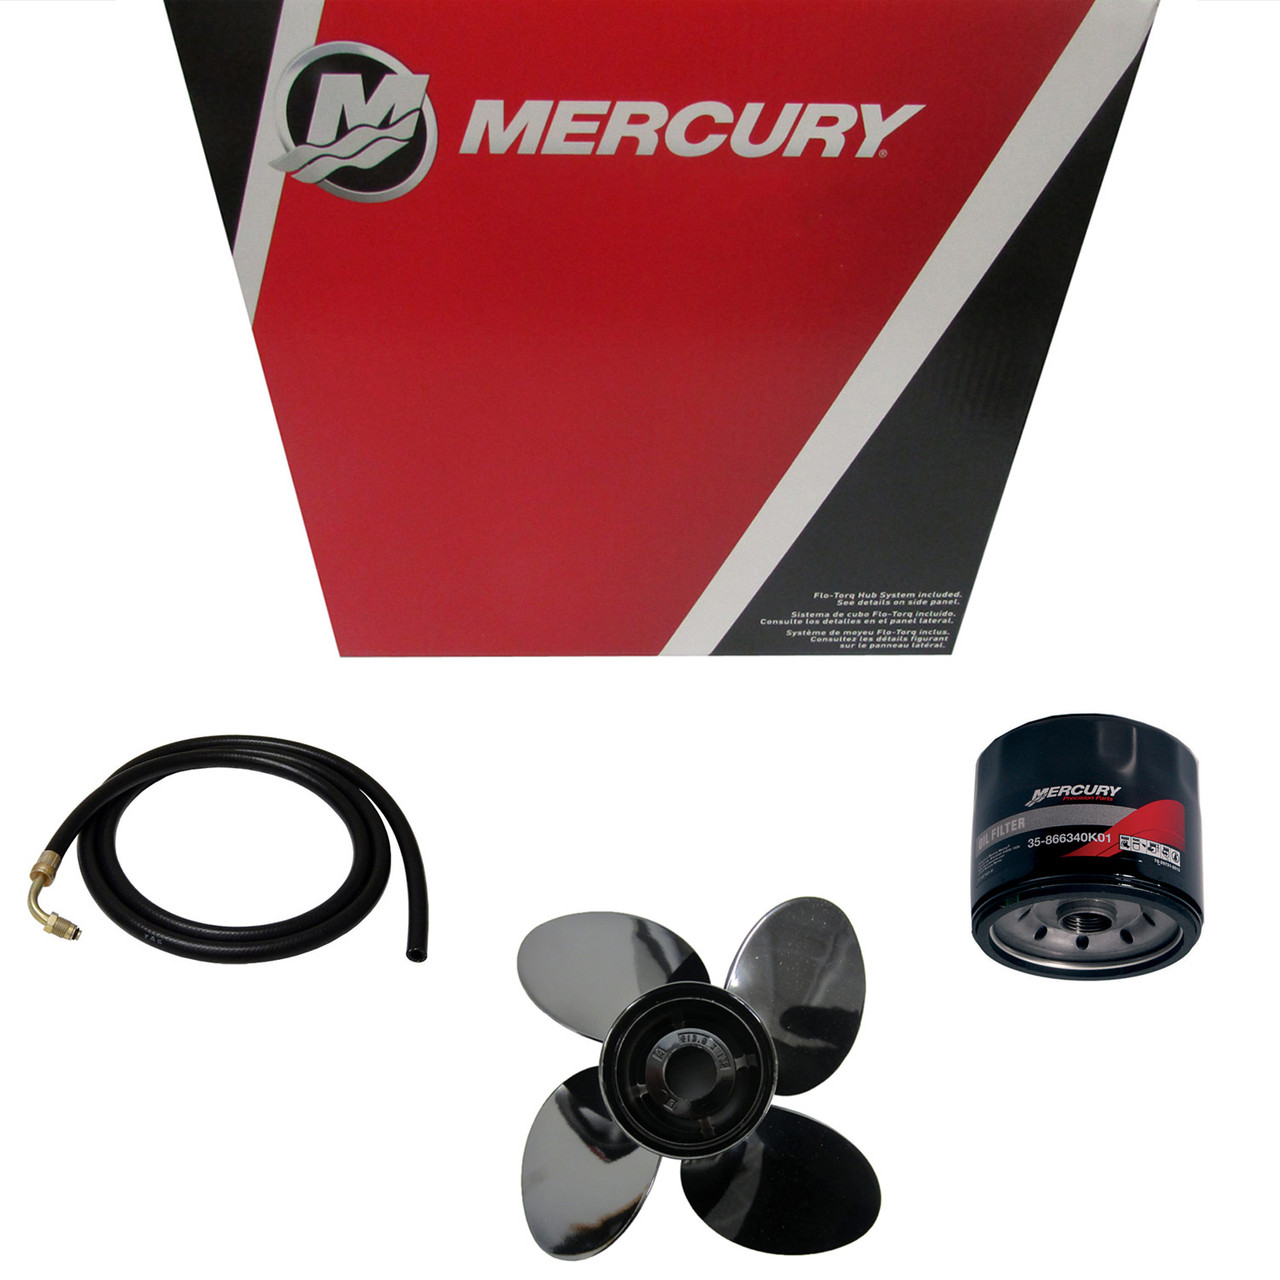 Mercury Marine/Mercruiser  New OEM DECAL SET 37-883526A08